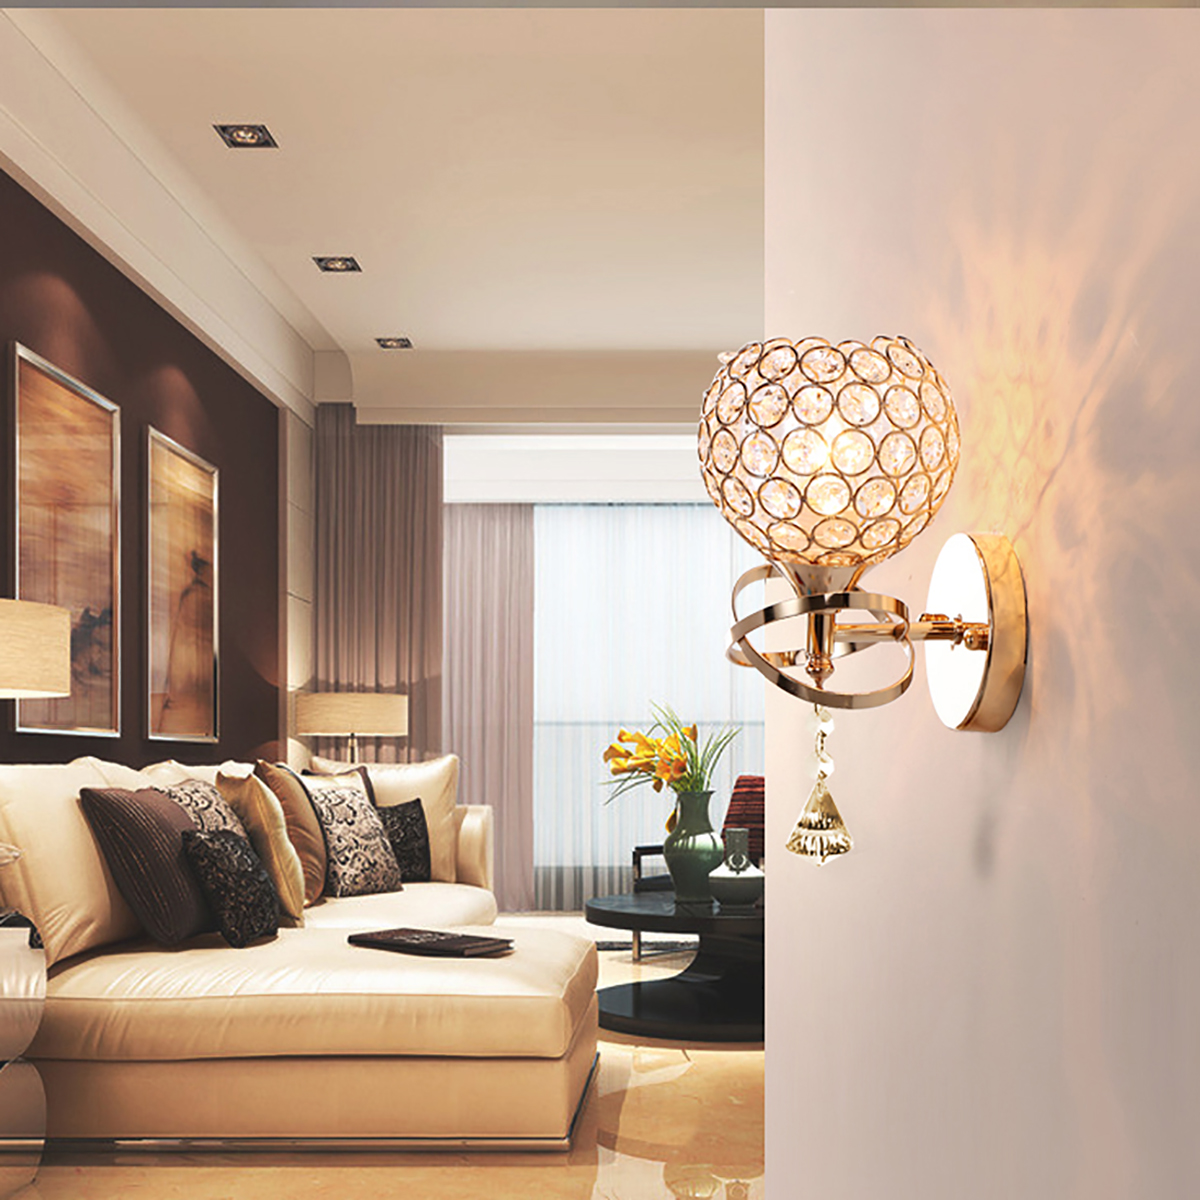 110-220V-E14-Modern-Chrome-Crystal-LED-Wall-Light-Lamp-Luxury-Bedside-Bedroom-Home-Decor-Without-Bul-1797018-4